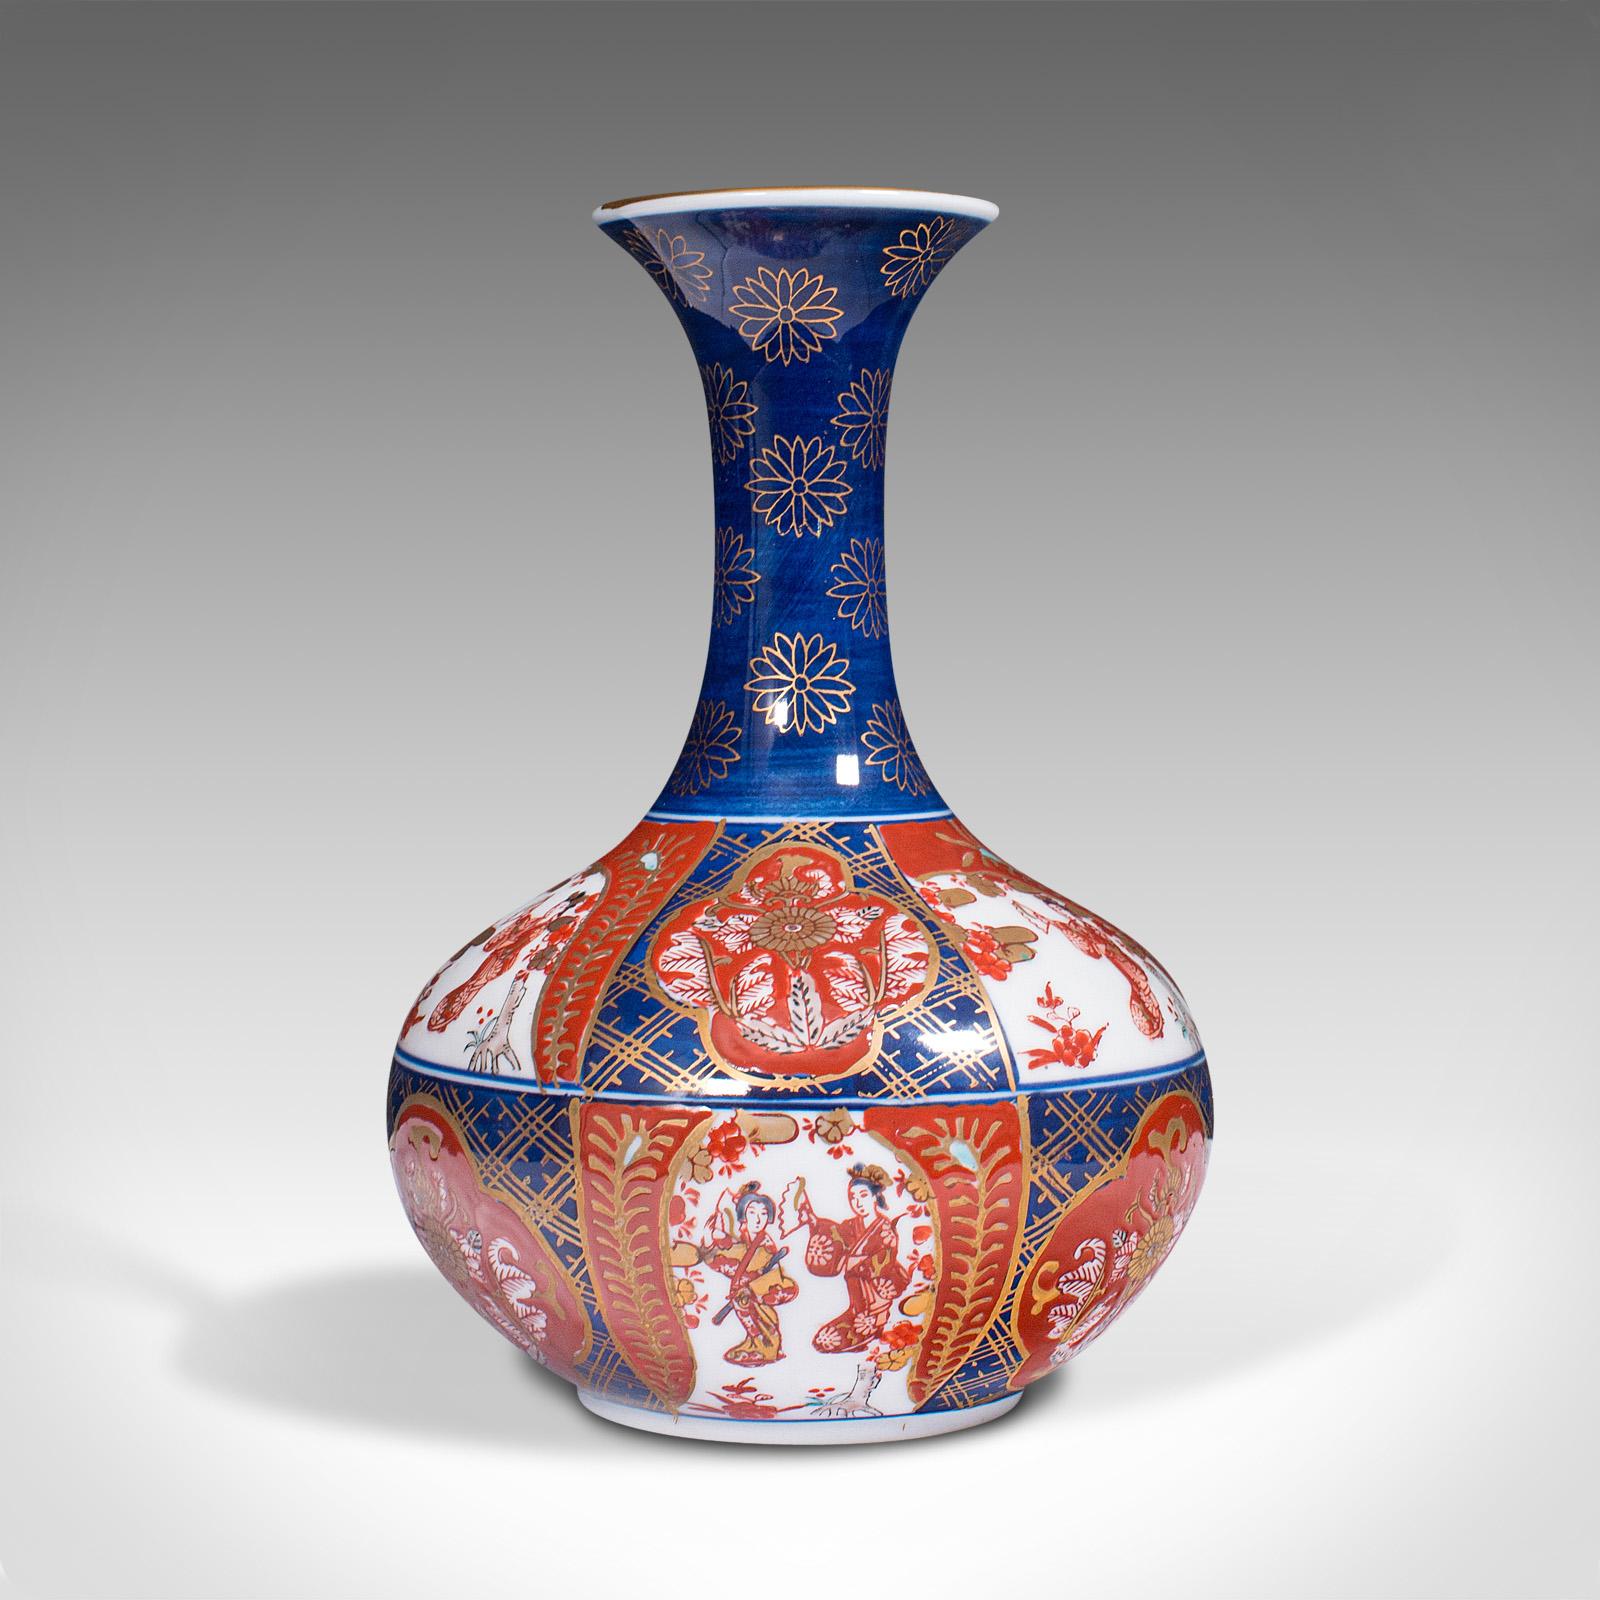 Vintage Imari Revival Flower Vase, Chinese, Ceramic, Decorative, Display Urn In Good Condition For Sale In Hele, Devon, GB